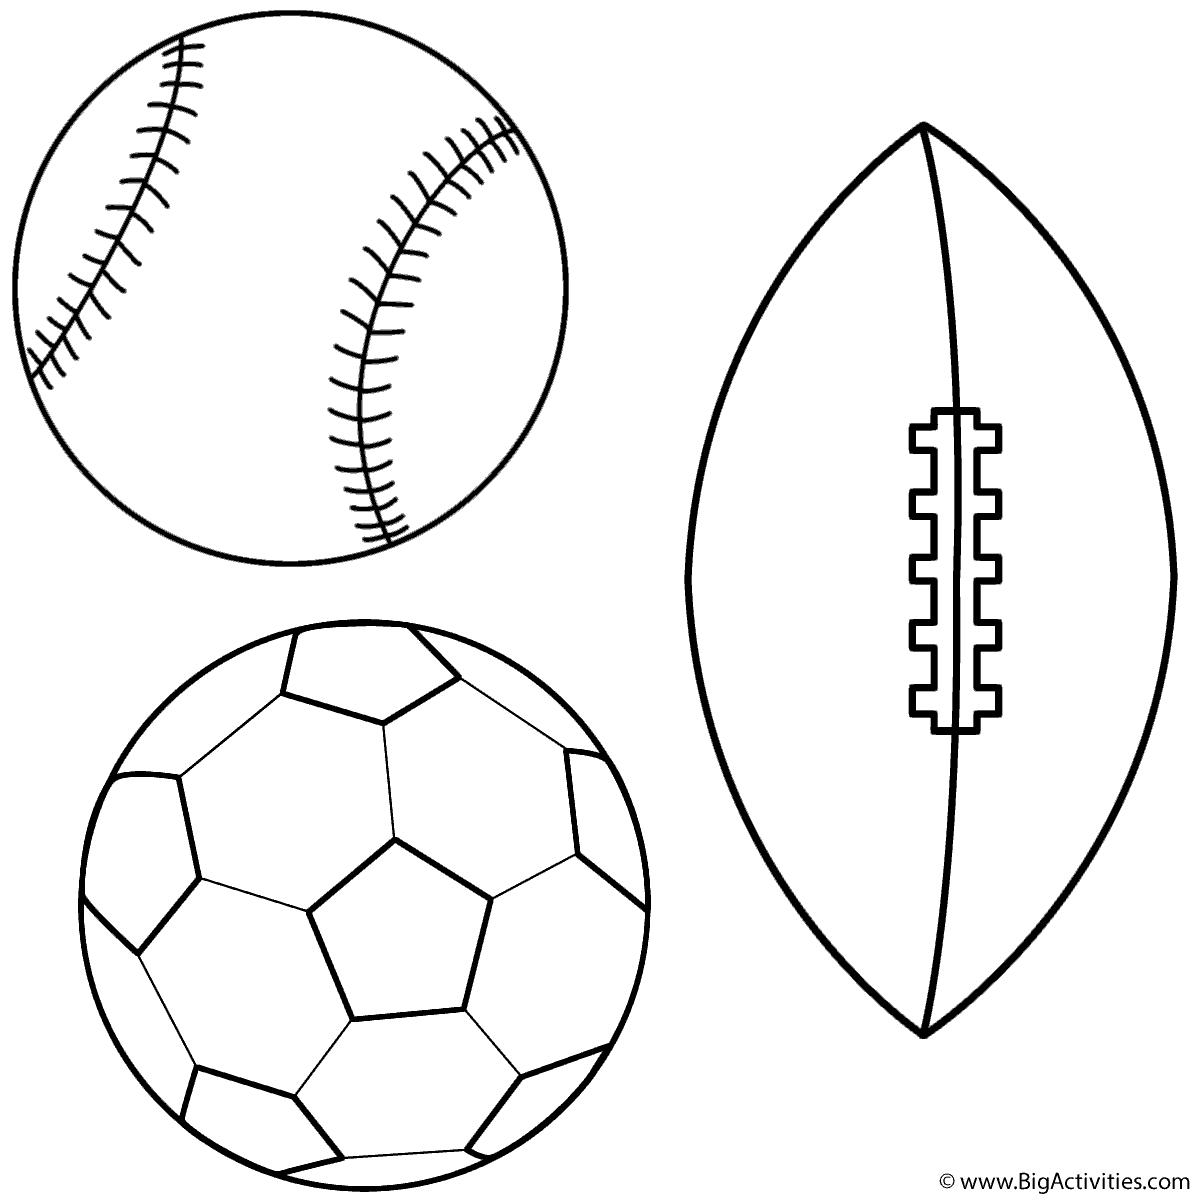 Baseball, Soccer Ball and Football - Coloring Page (Sports)